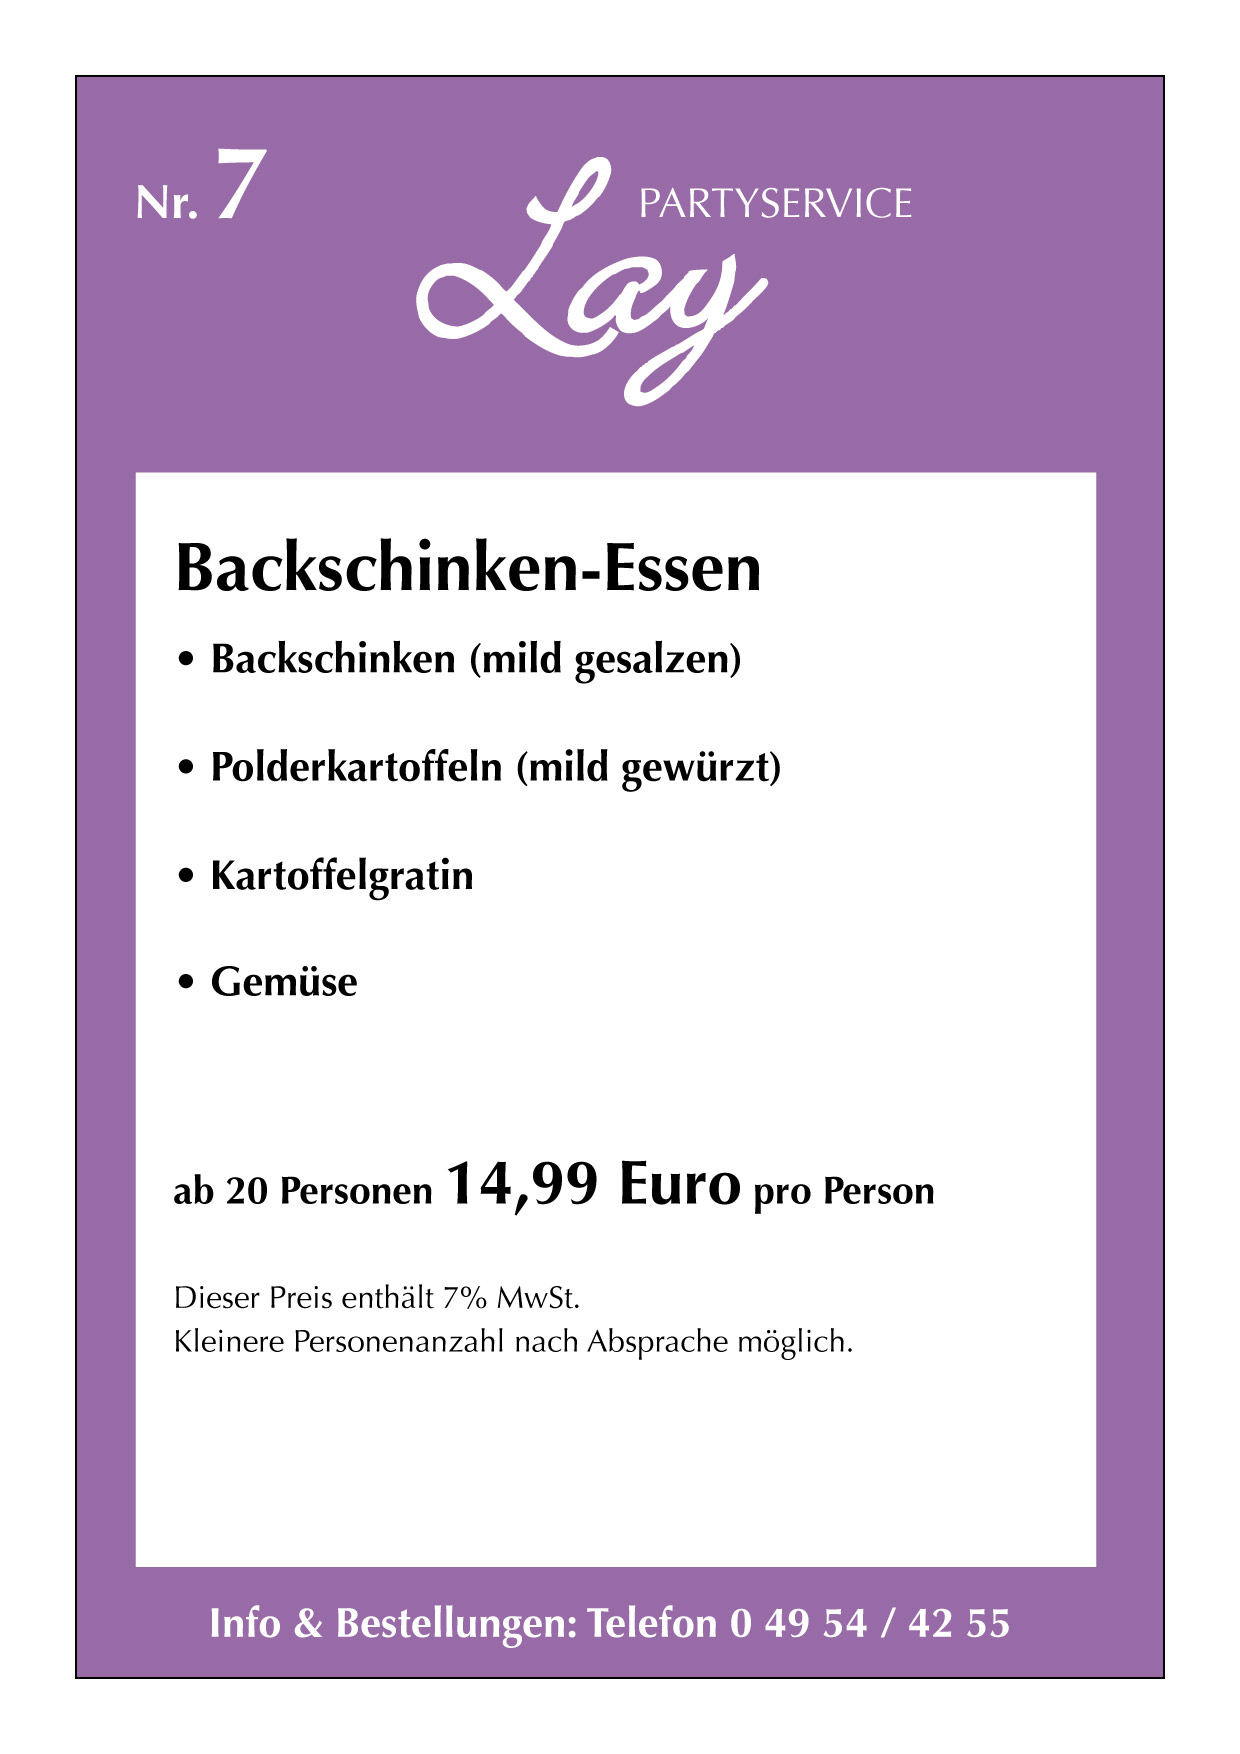 LAY-PARTY-Backschinken